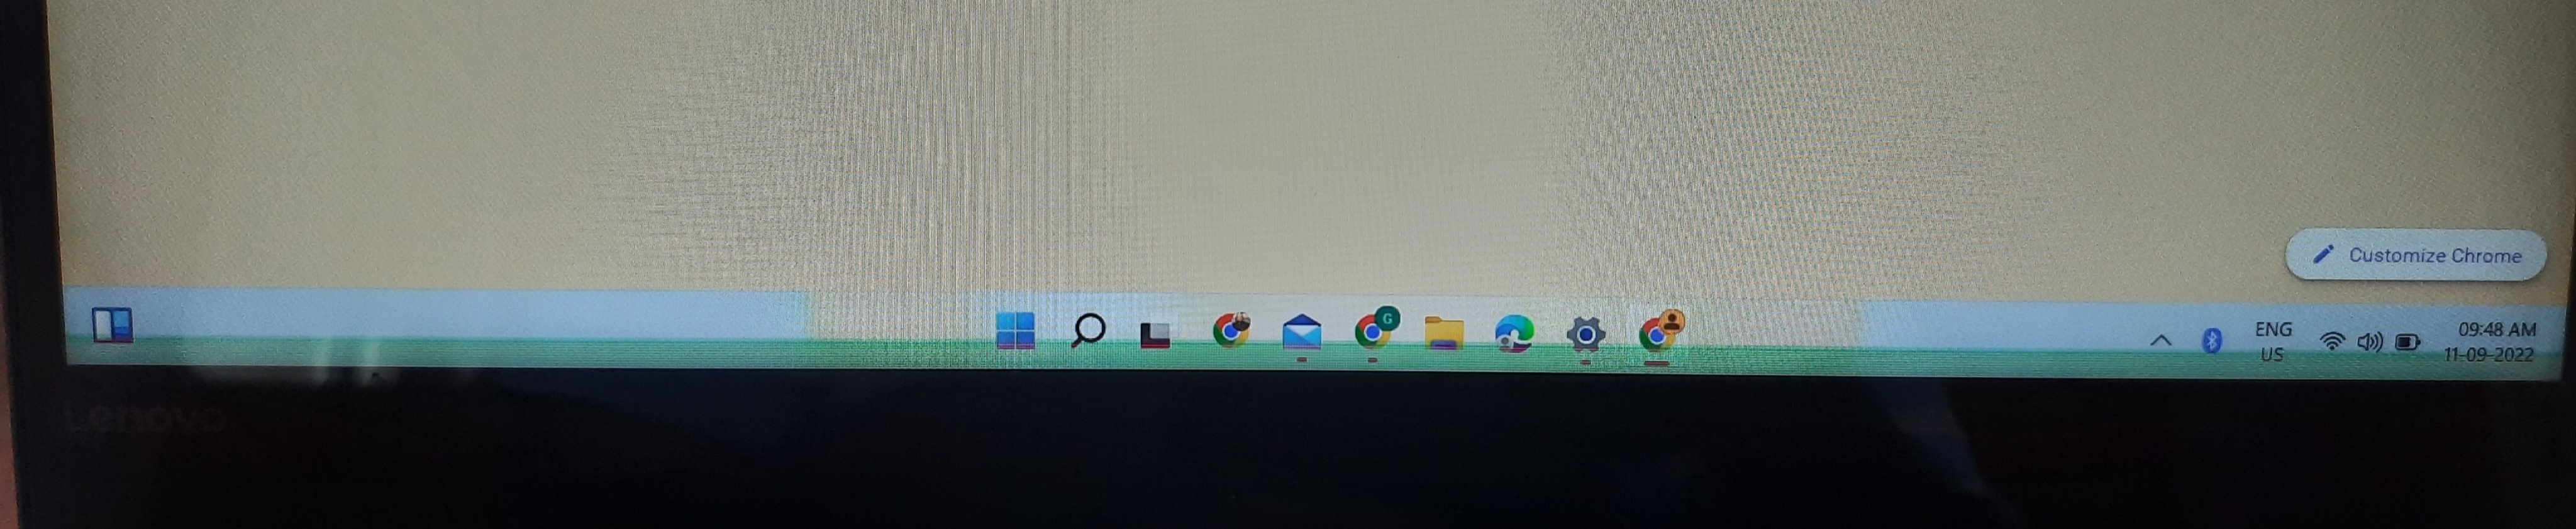 Laptop-screen-taskbar-color-change-problem - English Community - LENOVO  COMMUNITY